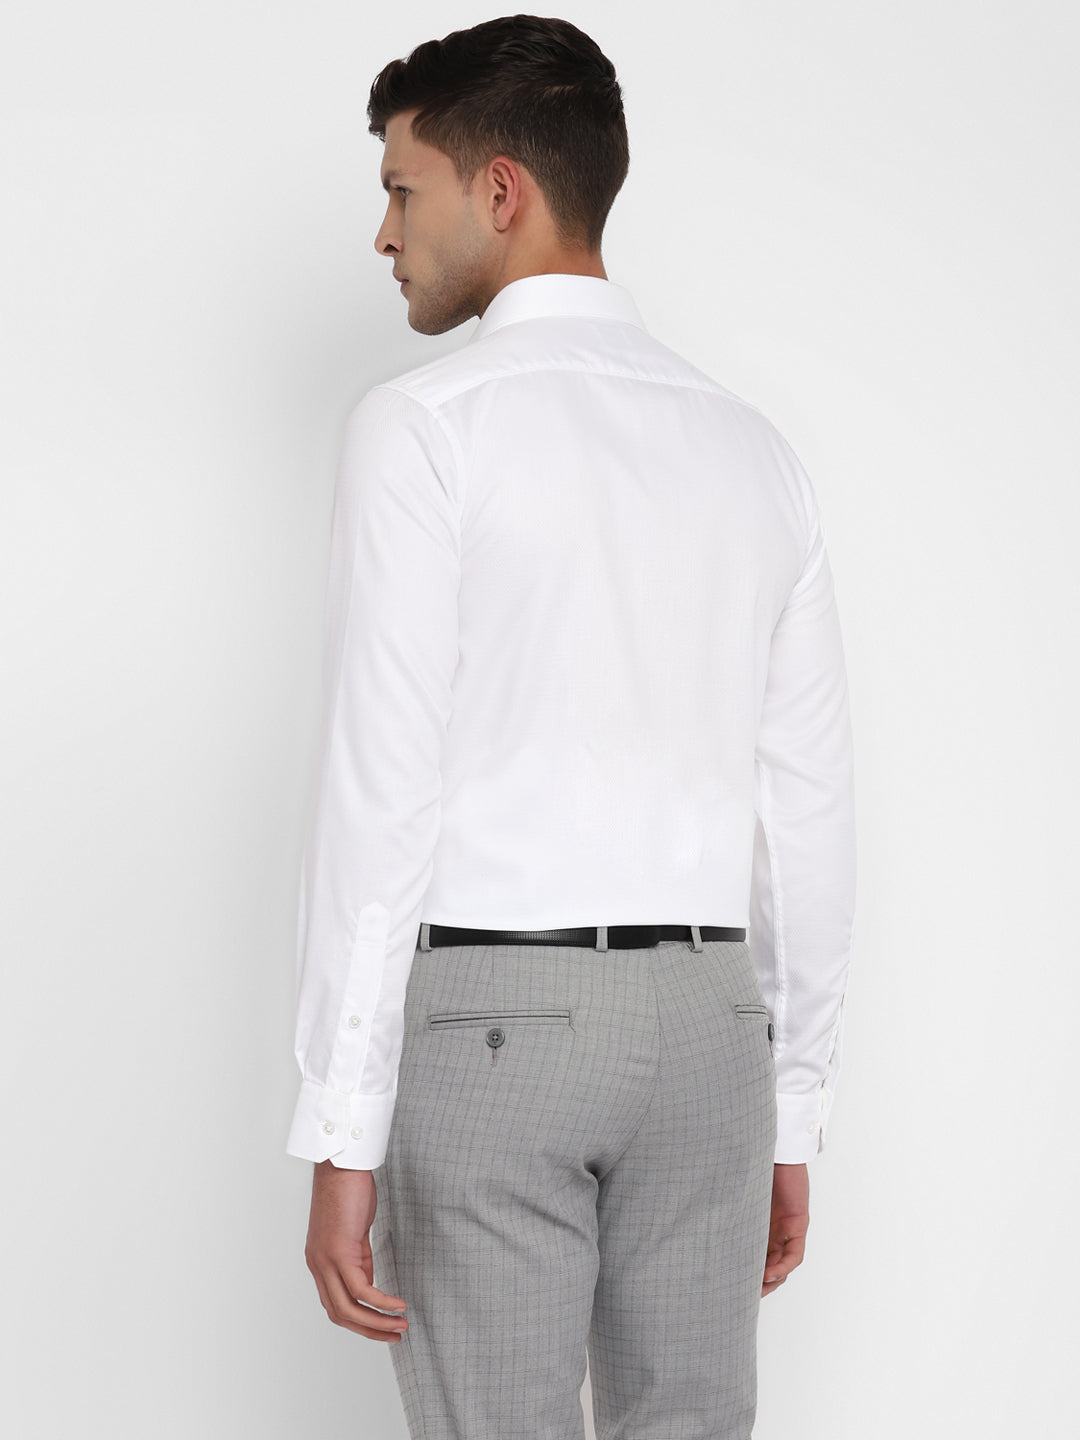 Cotton White Self Design Slim Fit Formal Shirt